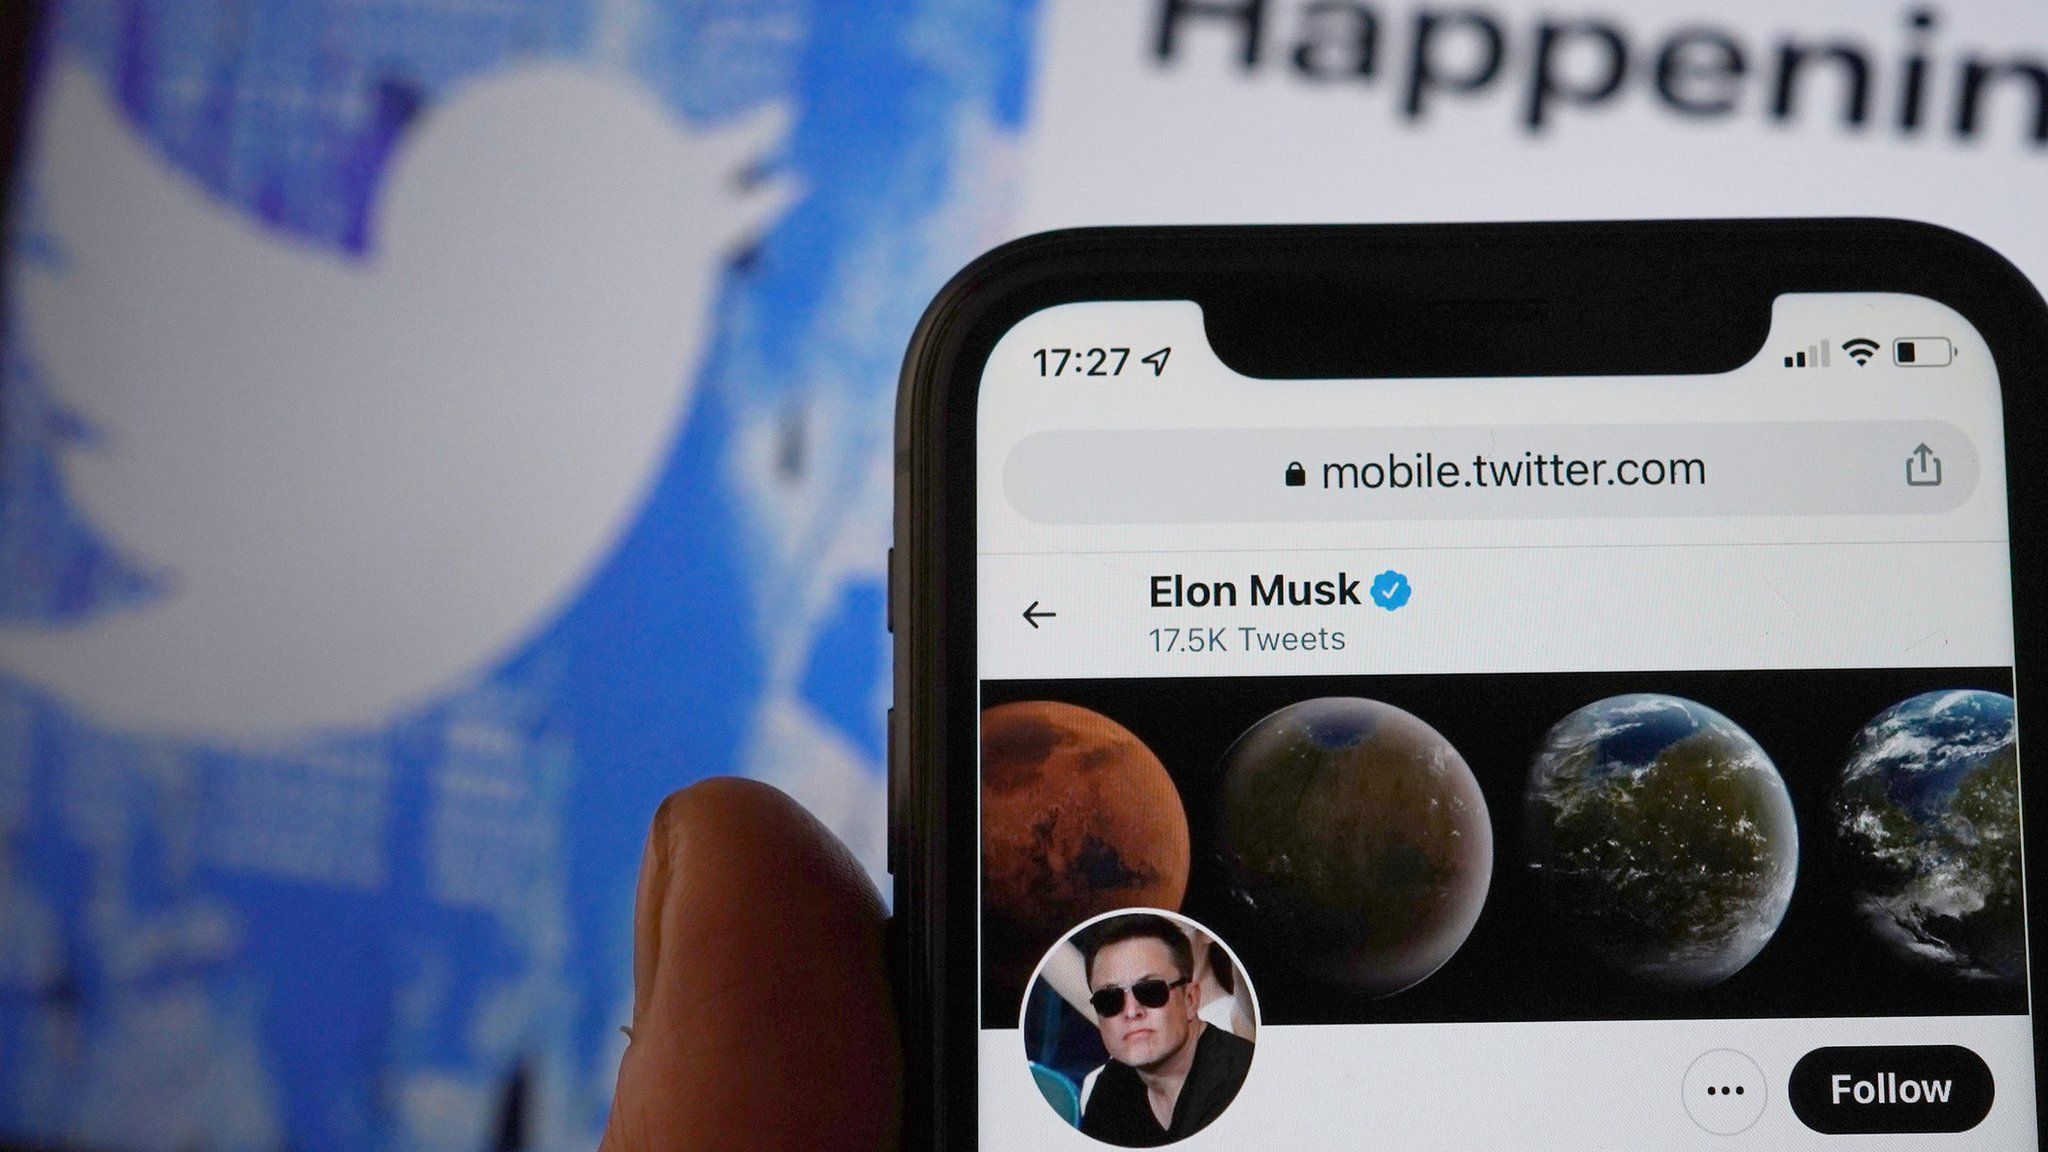 Elon Musk's Twitter profile with Twitter logo